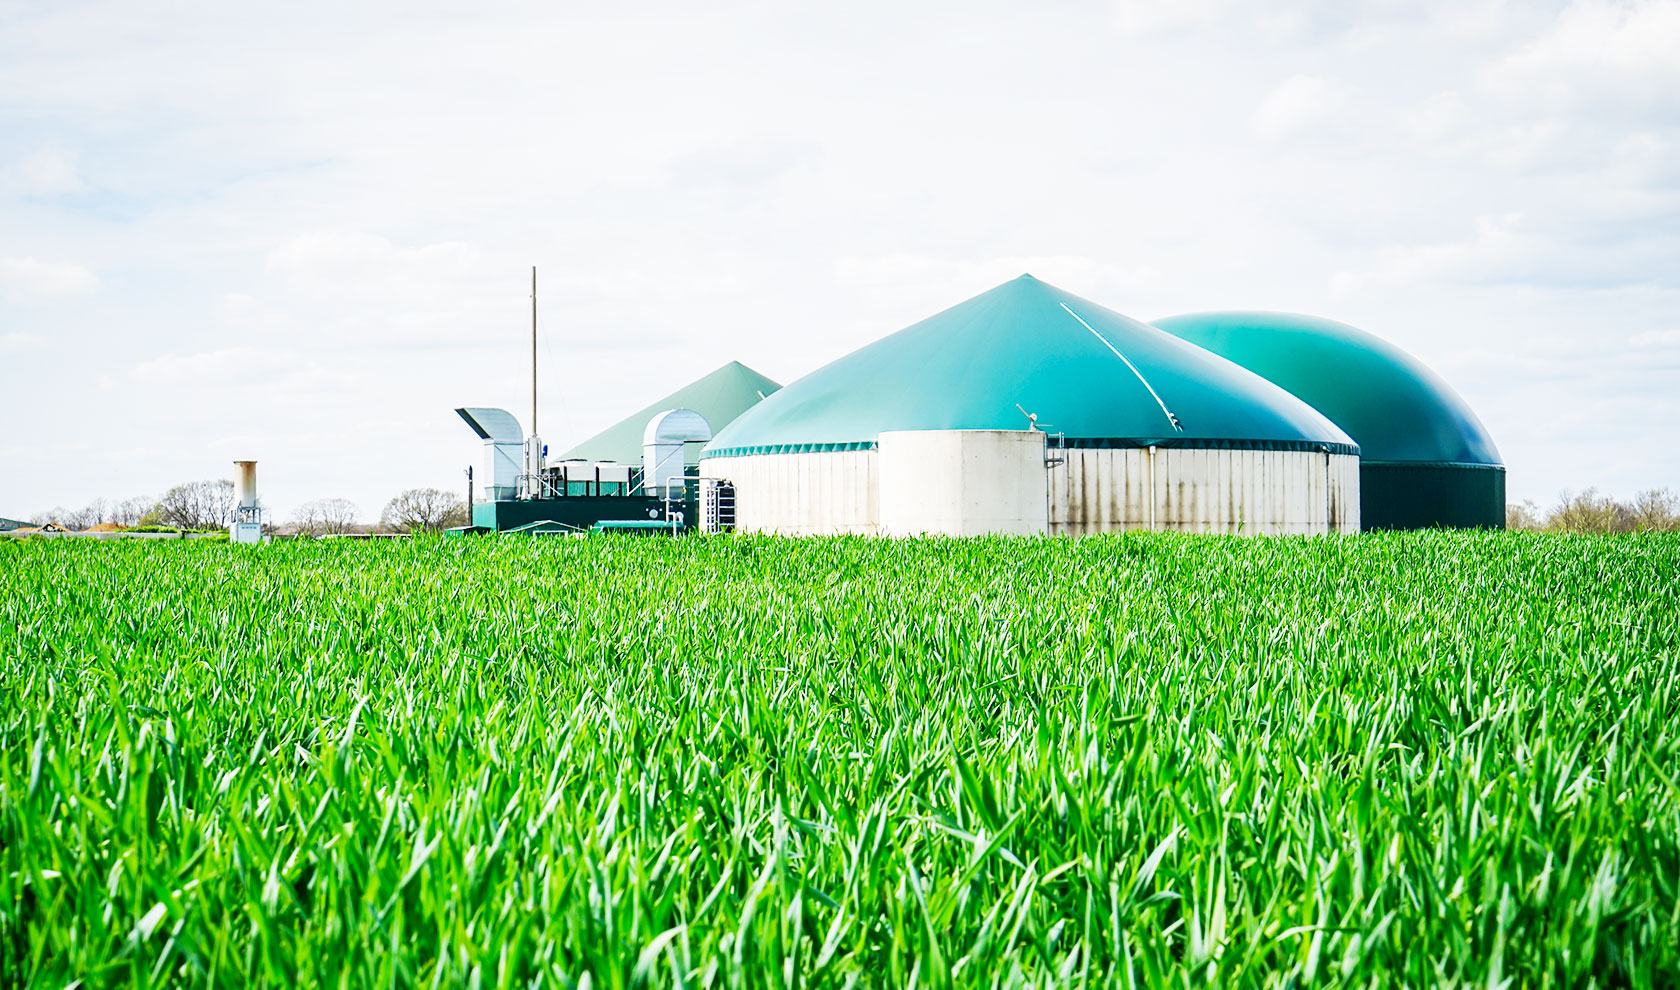 Biogasanlage Industrieautomatik frankonia-Hydraulik, grünes Maisfeld, grünes Dach, rundes Dach